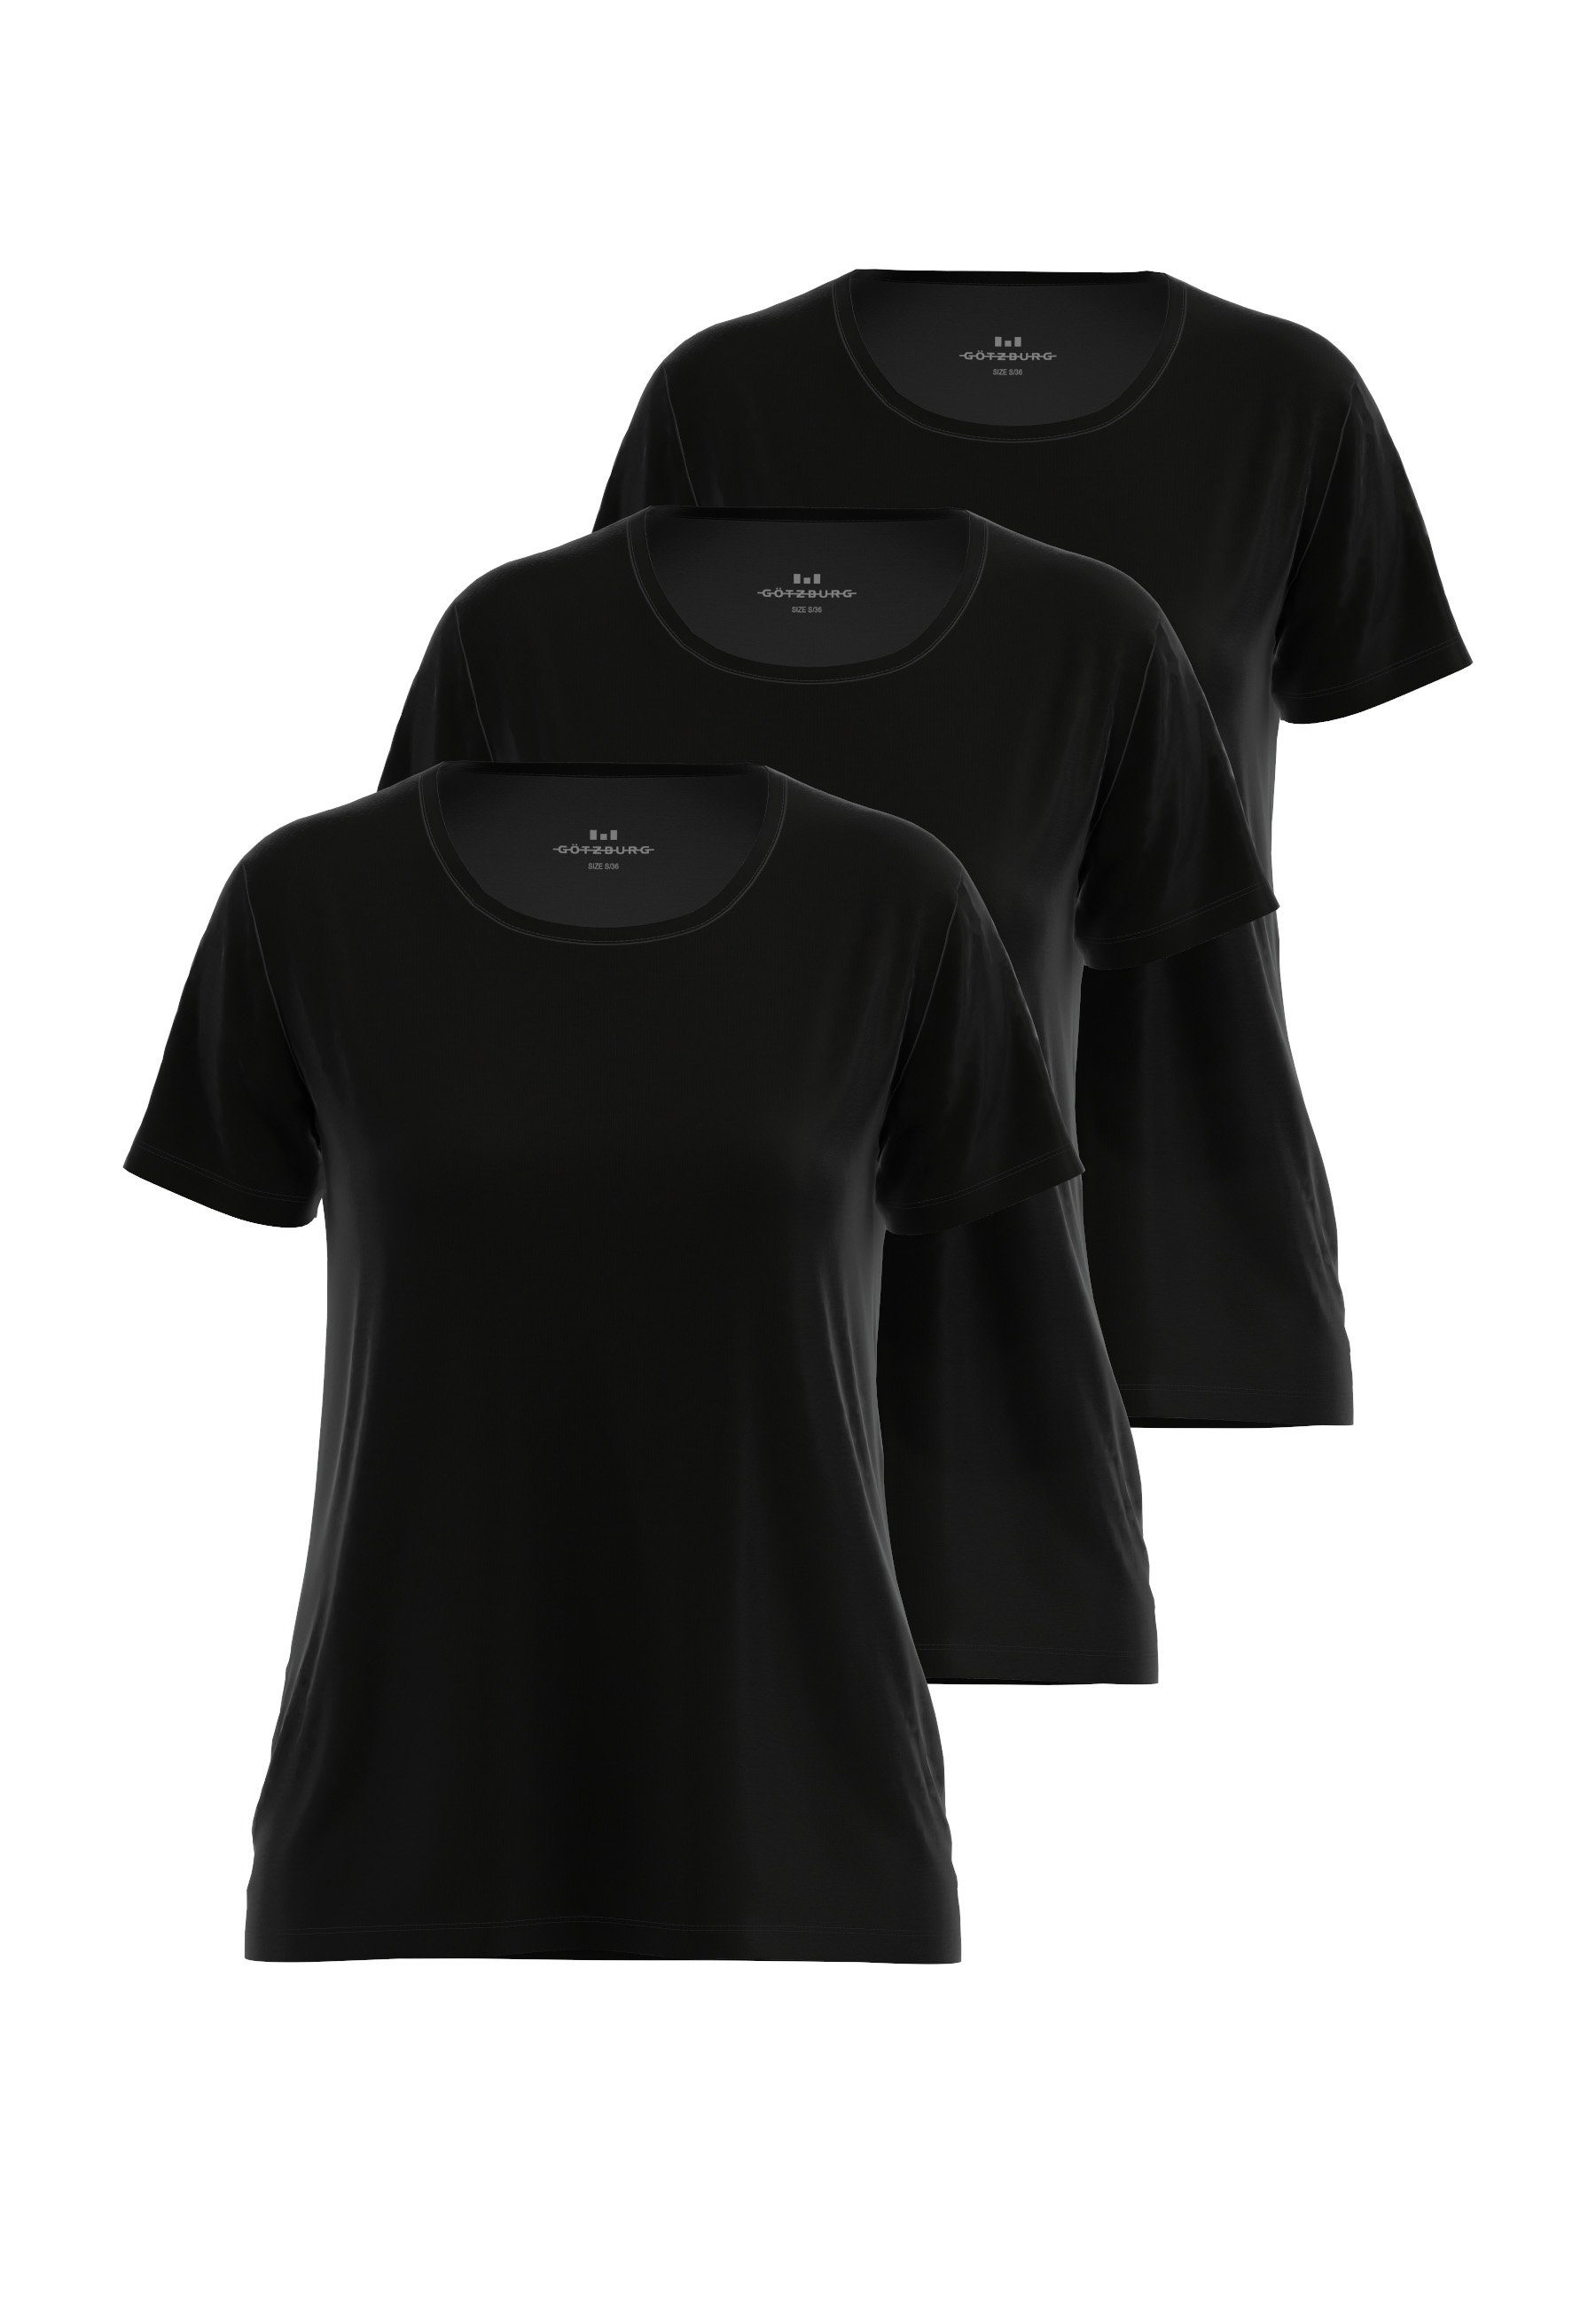 GÖTZBURG Unterziehshirt GÖTZBURG Damen Shirt schwarz uni 3er Pack (3-St) schwarz-dunkel-uni